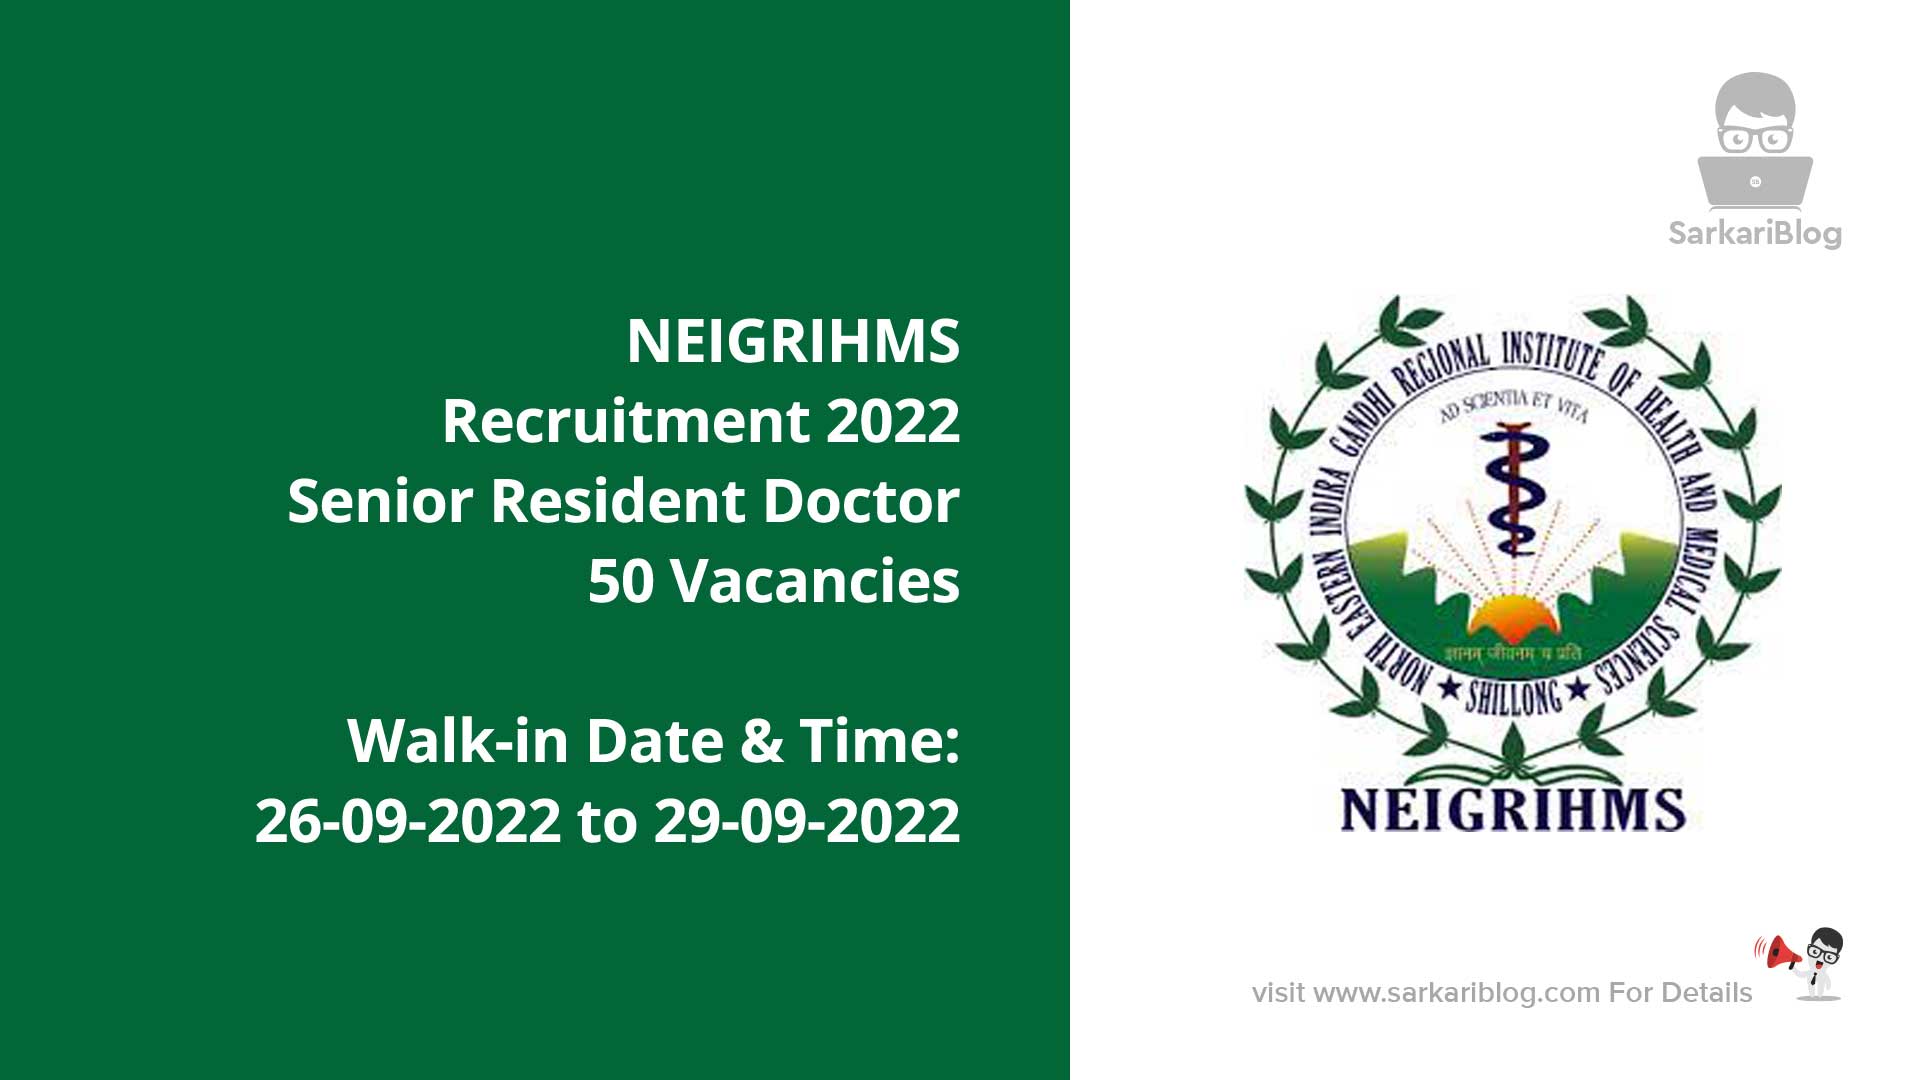 NEIGRIHMS Recruitment 2022